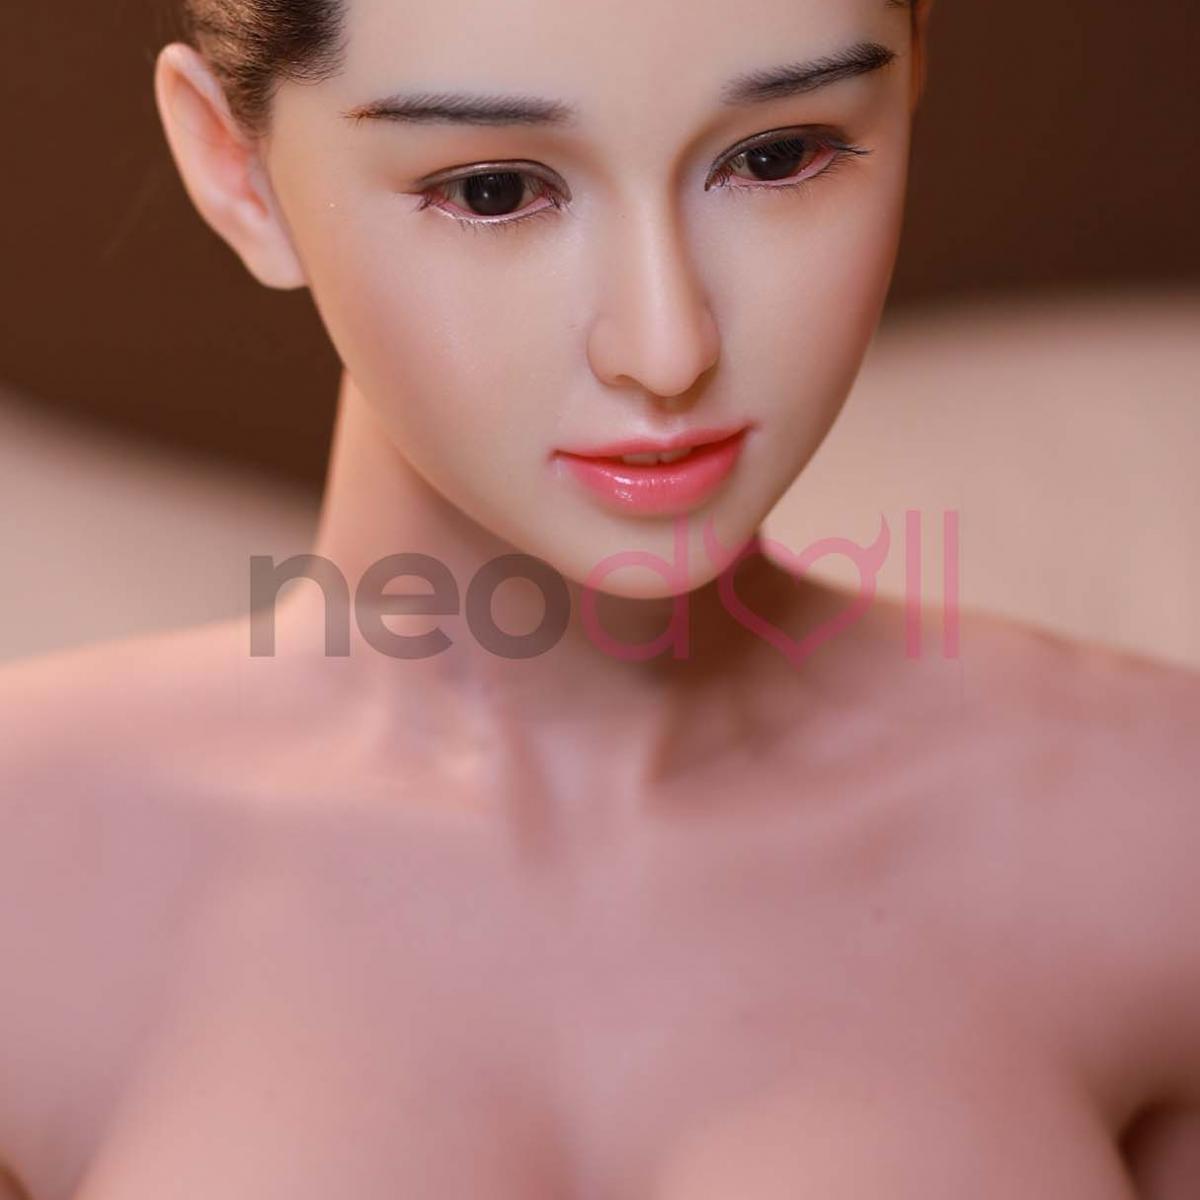 Neodoll Sugar Babe - Alysa - Sex Doll Silicone Head - M16 Compatible - Natural